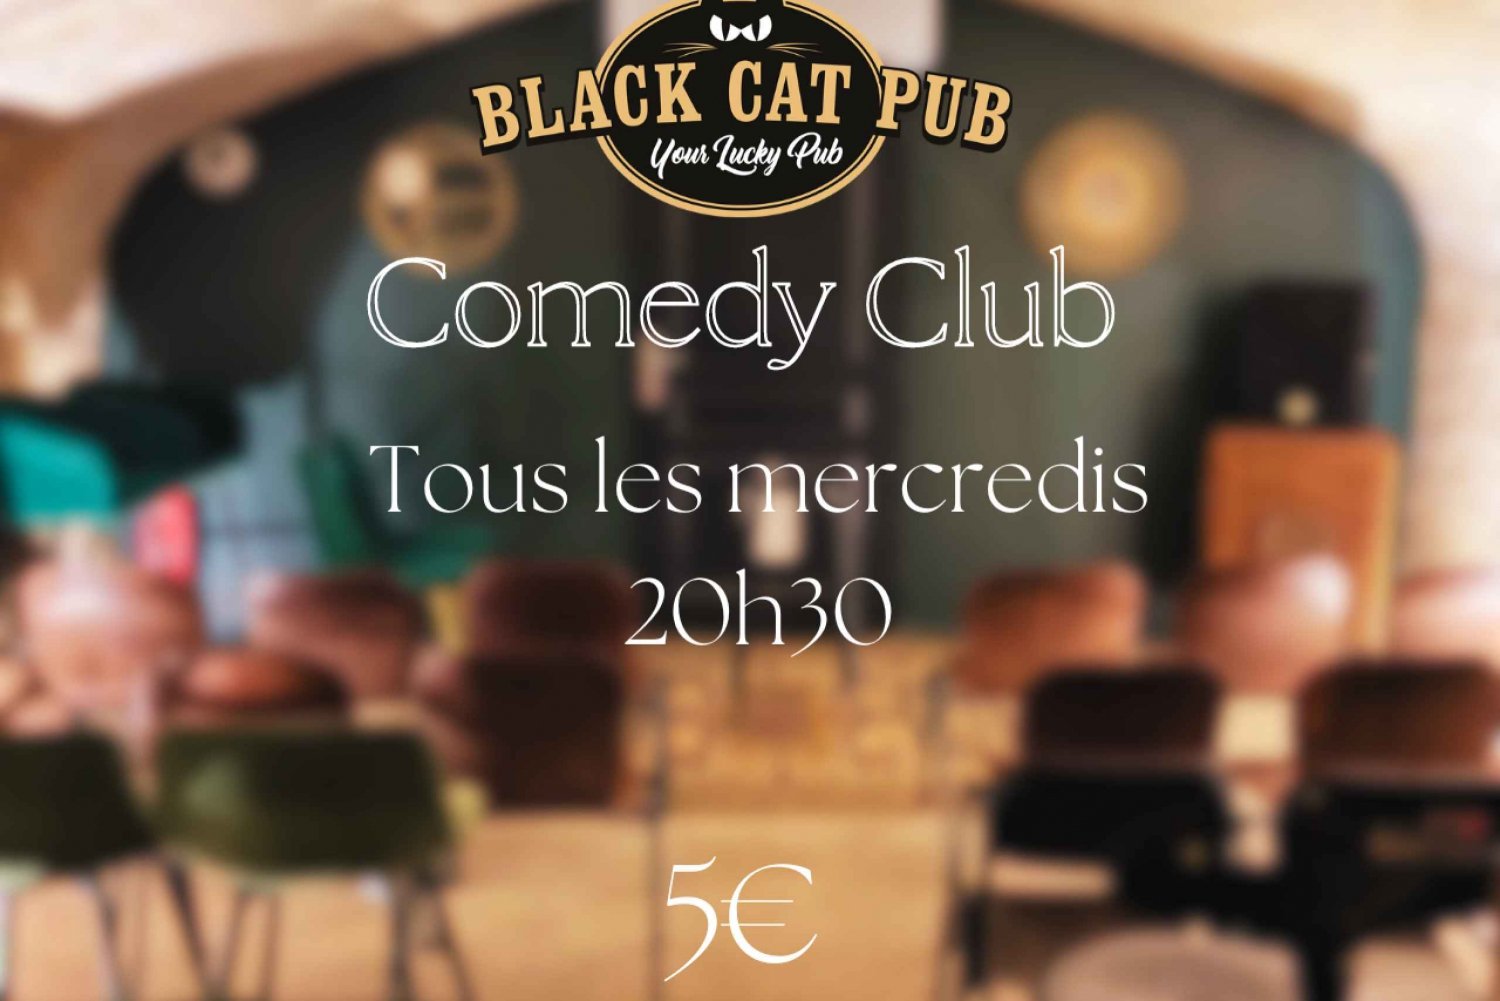 Der Black Cat Comedy Club